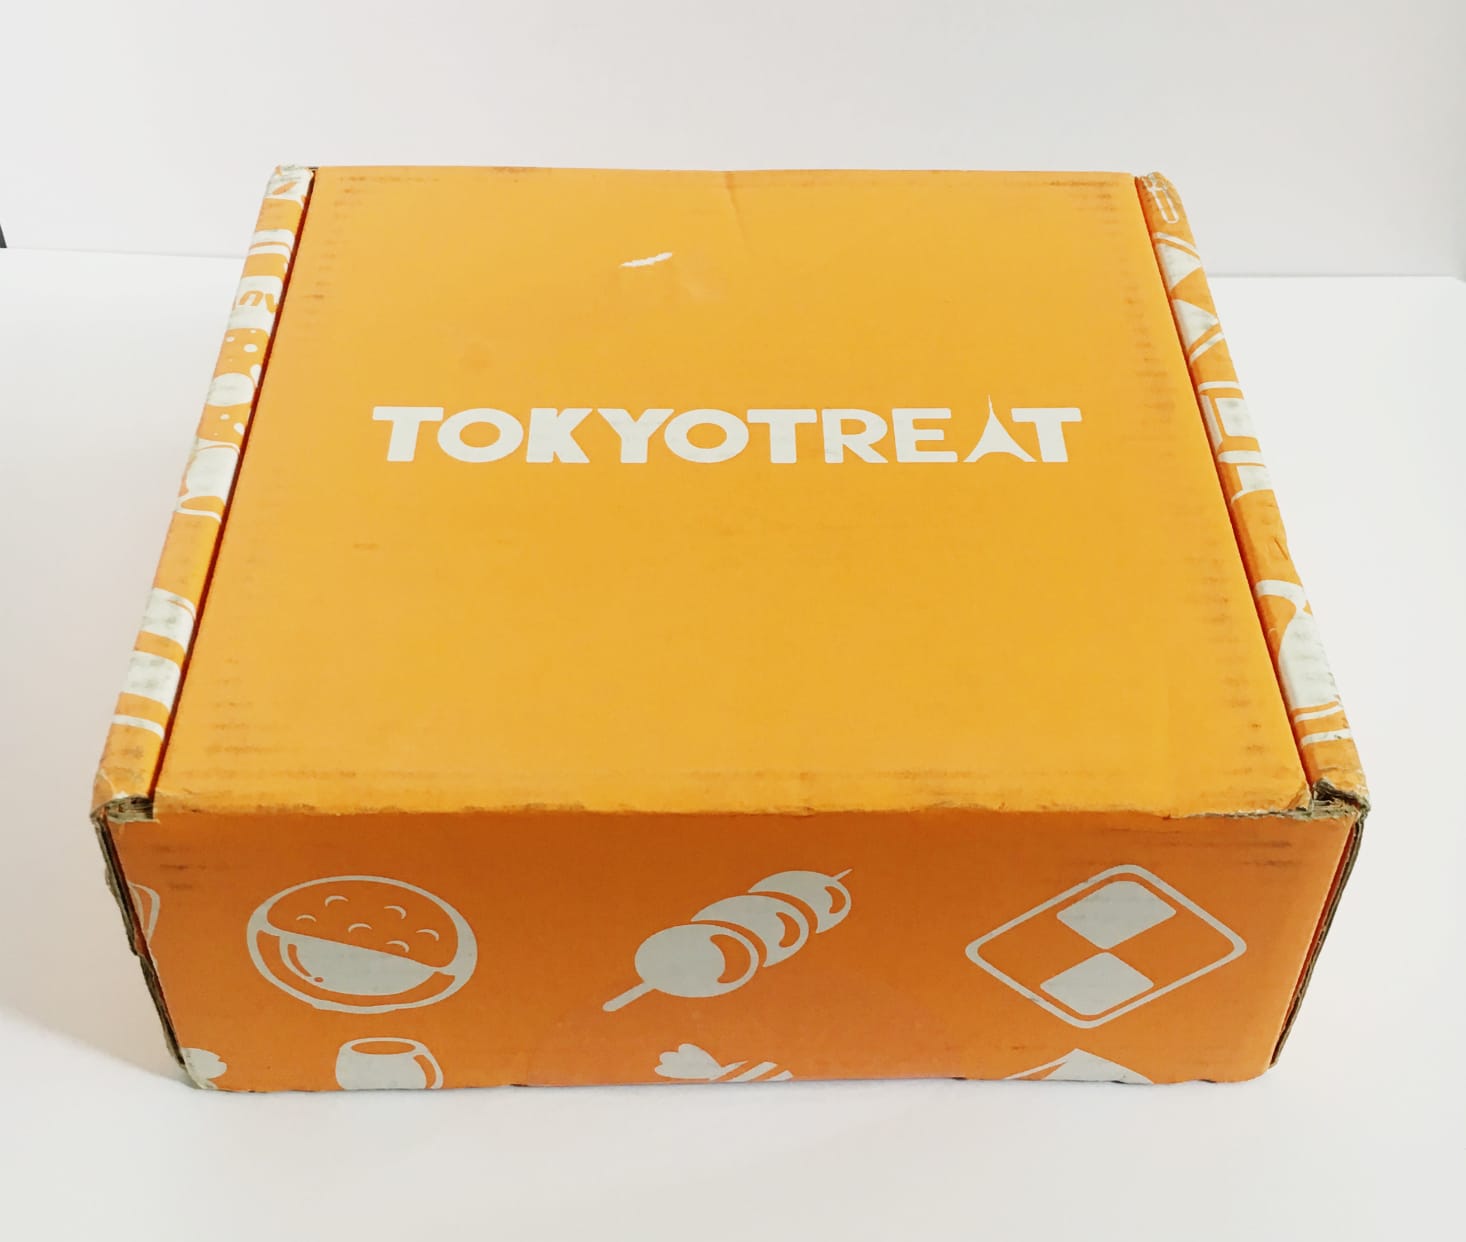 TokyoTreat Subscription Box Review – June 2017